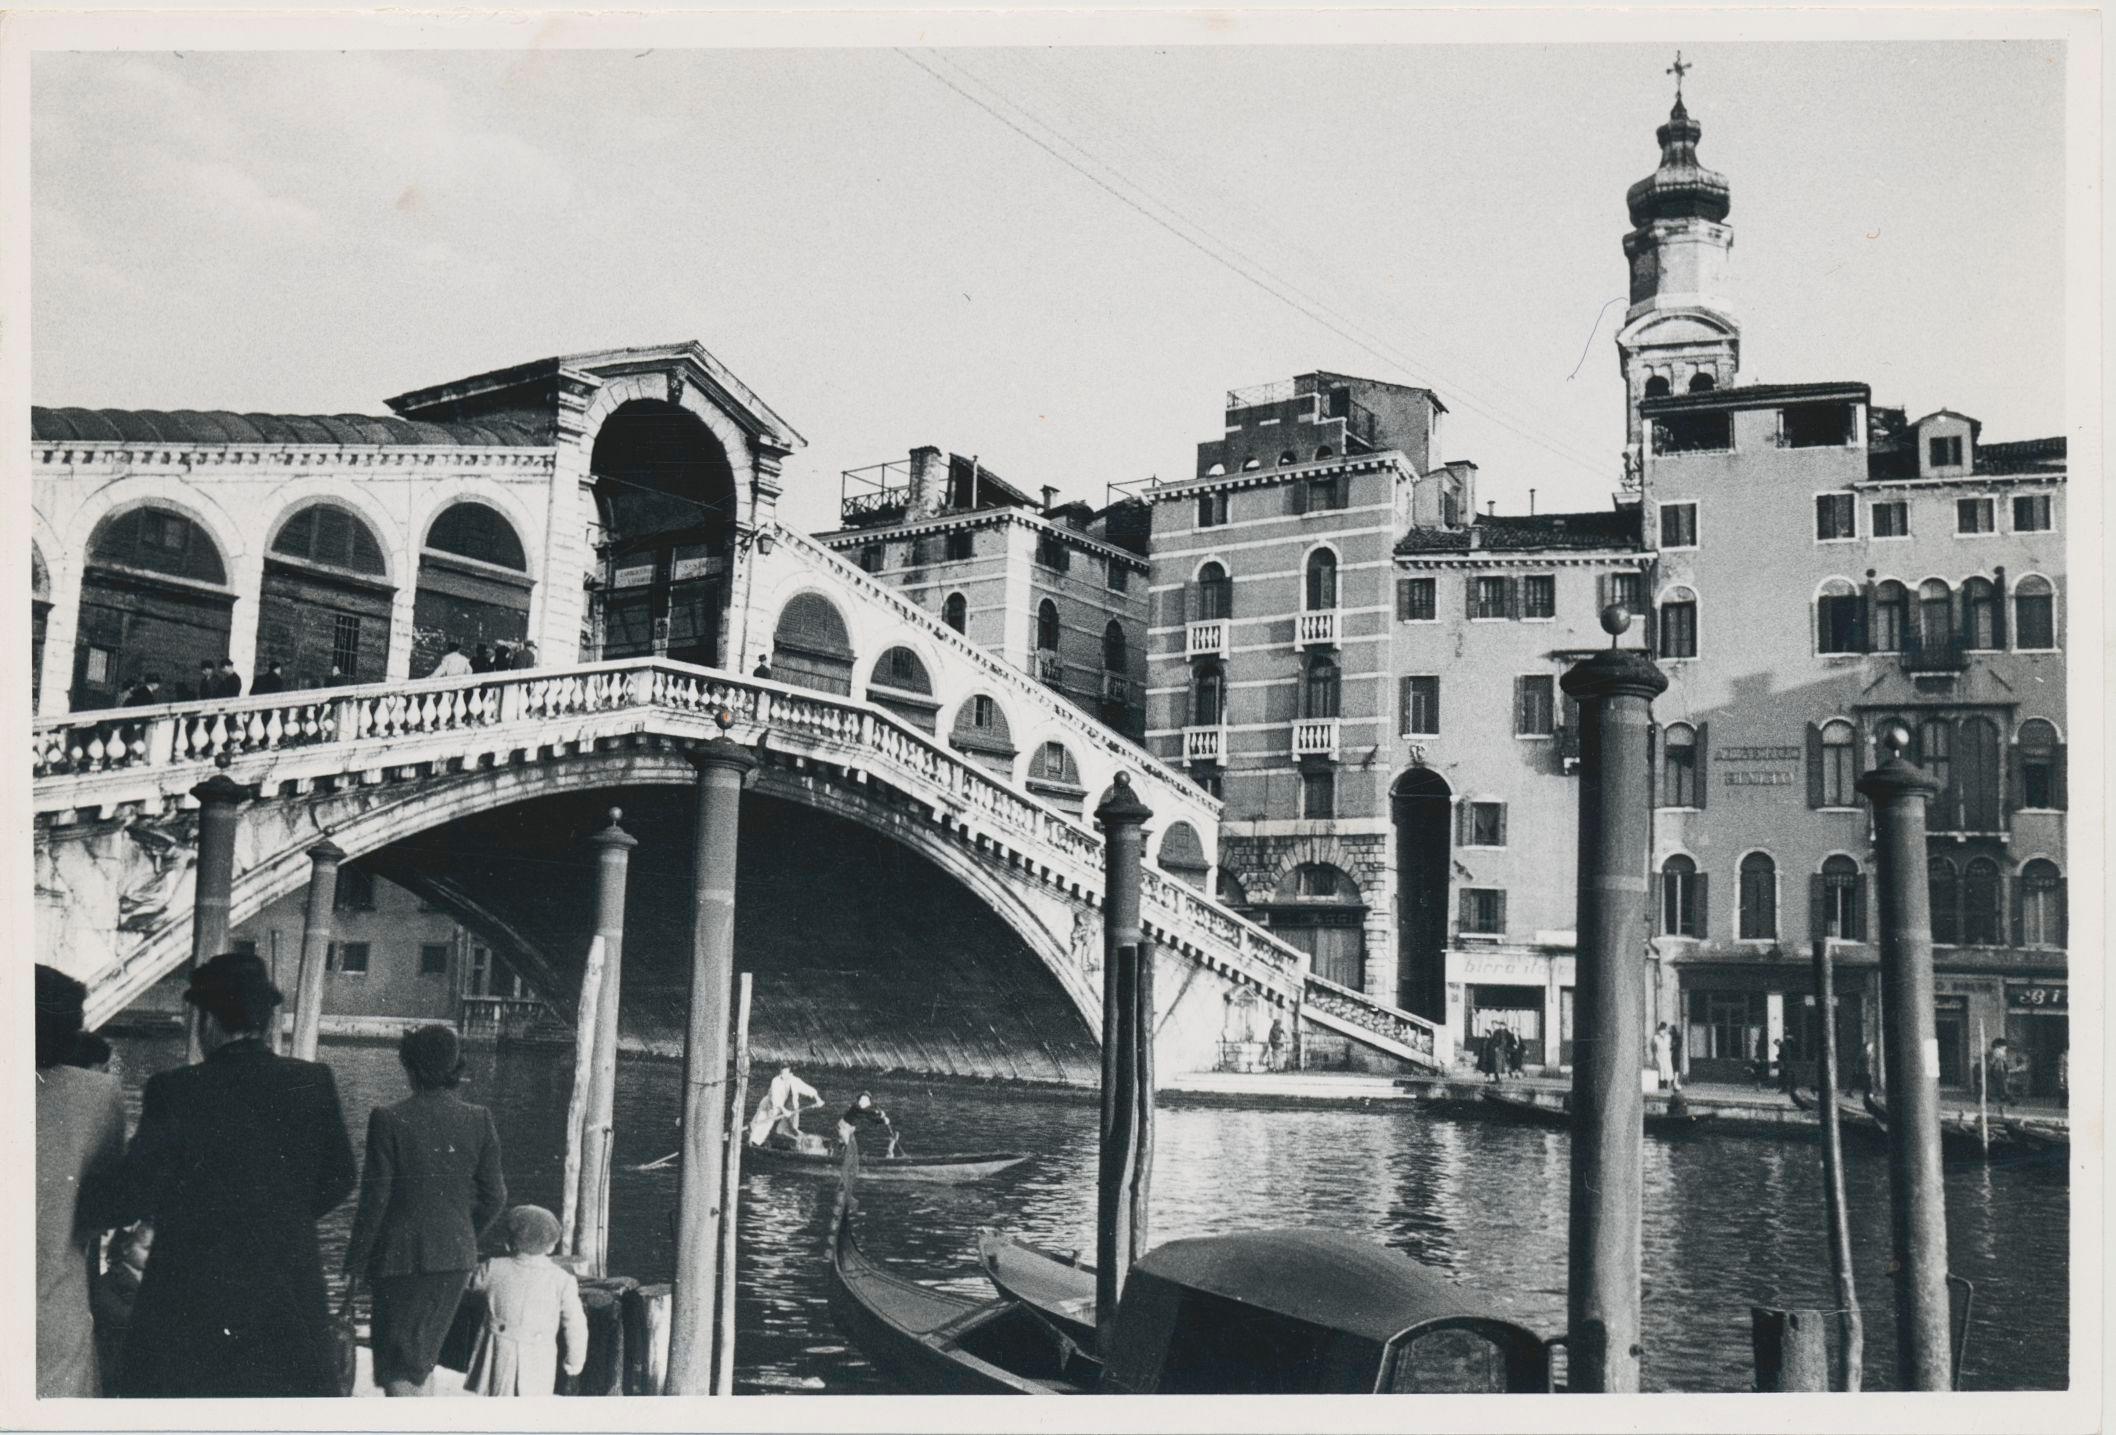 Erich Andres Black and White Photograph - Venice, Venedig, Rialto Bridge, Italy 1950s, 12 x 17, 8 cm